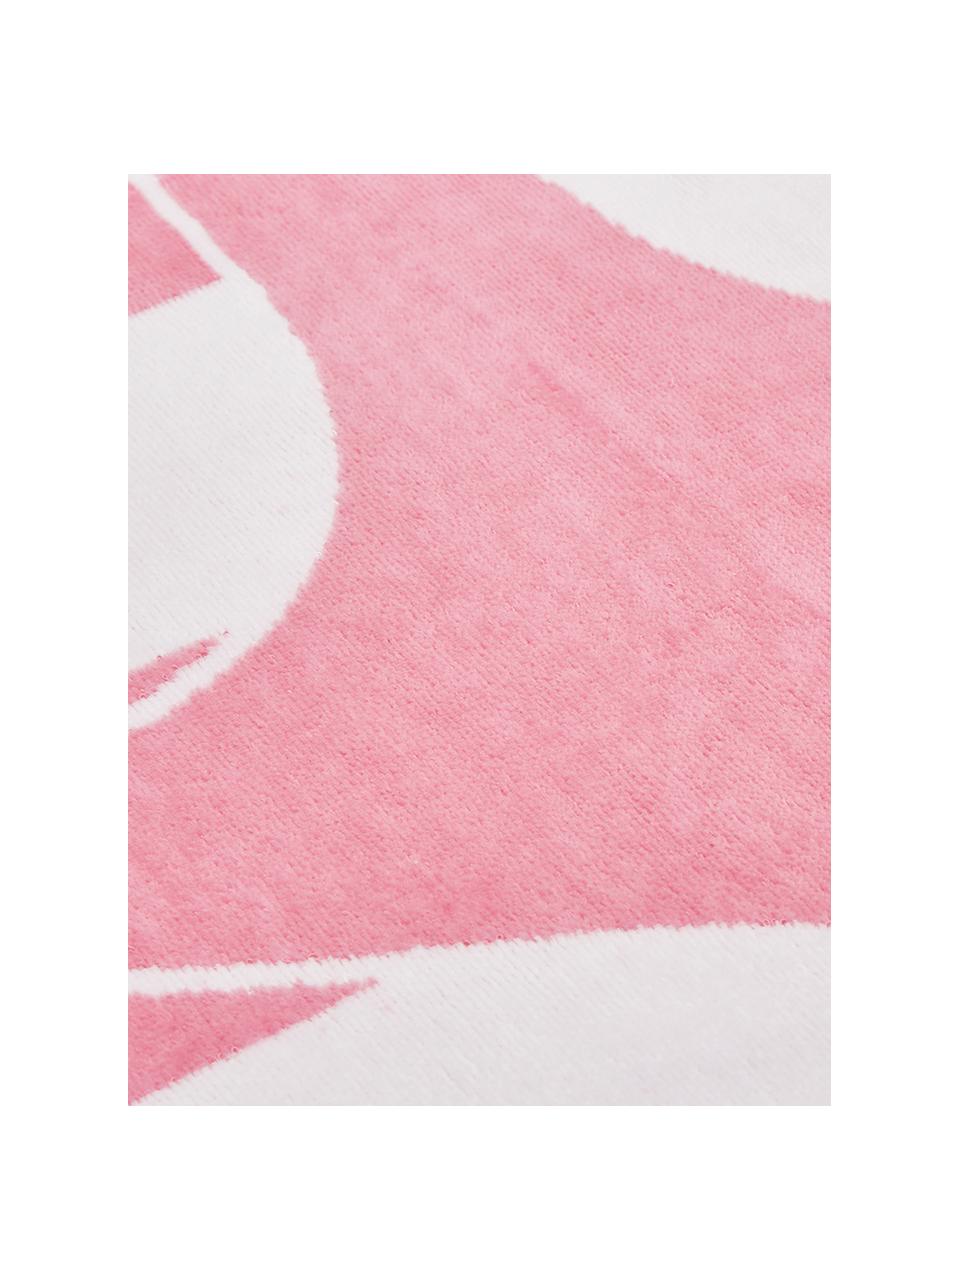 Strandlaken Anko, Katoen
Lichte kwaliteit 380 g/m², Roze, wit, 80 x 160 cm